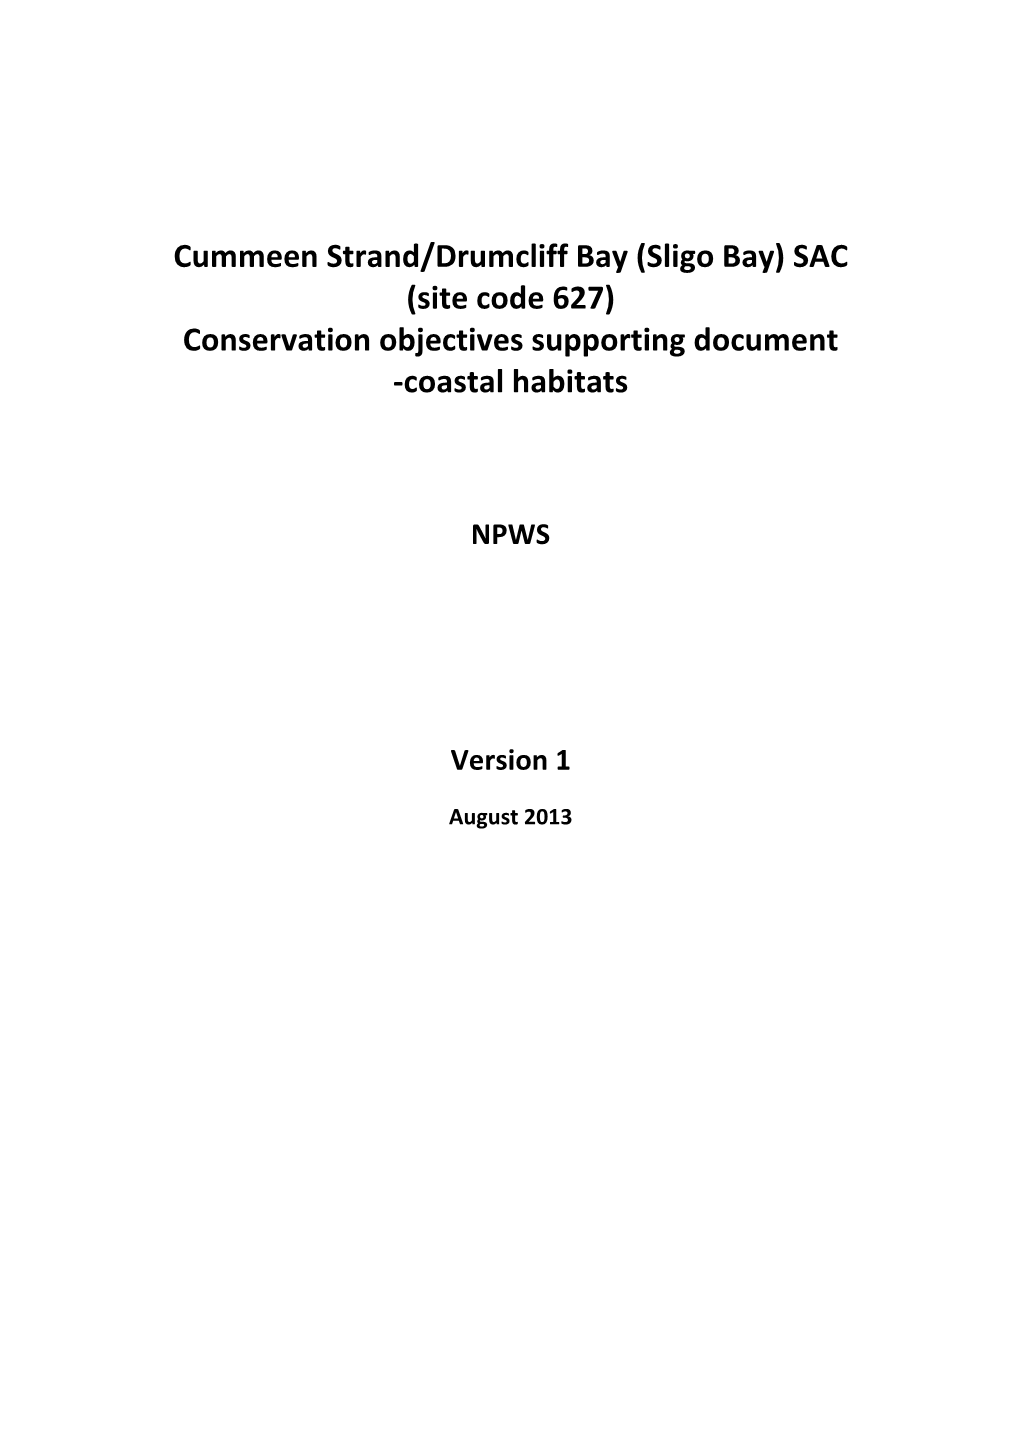 Cummeen Strand/Drumcliff Bay (Sligo Bay) SAC (Site Code 627) Conservation Objectives Supporting Document -Coastal Habitats